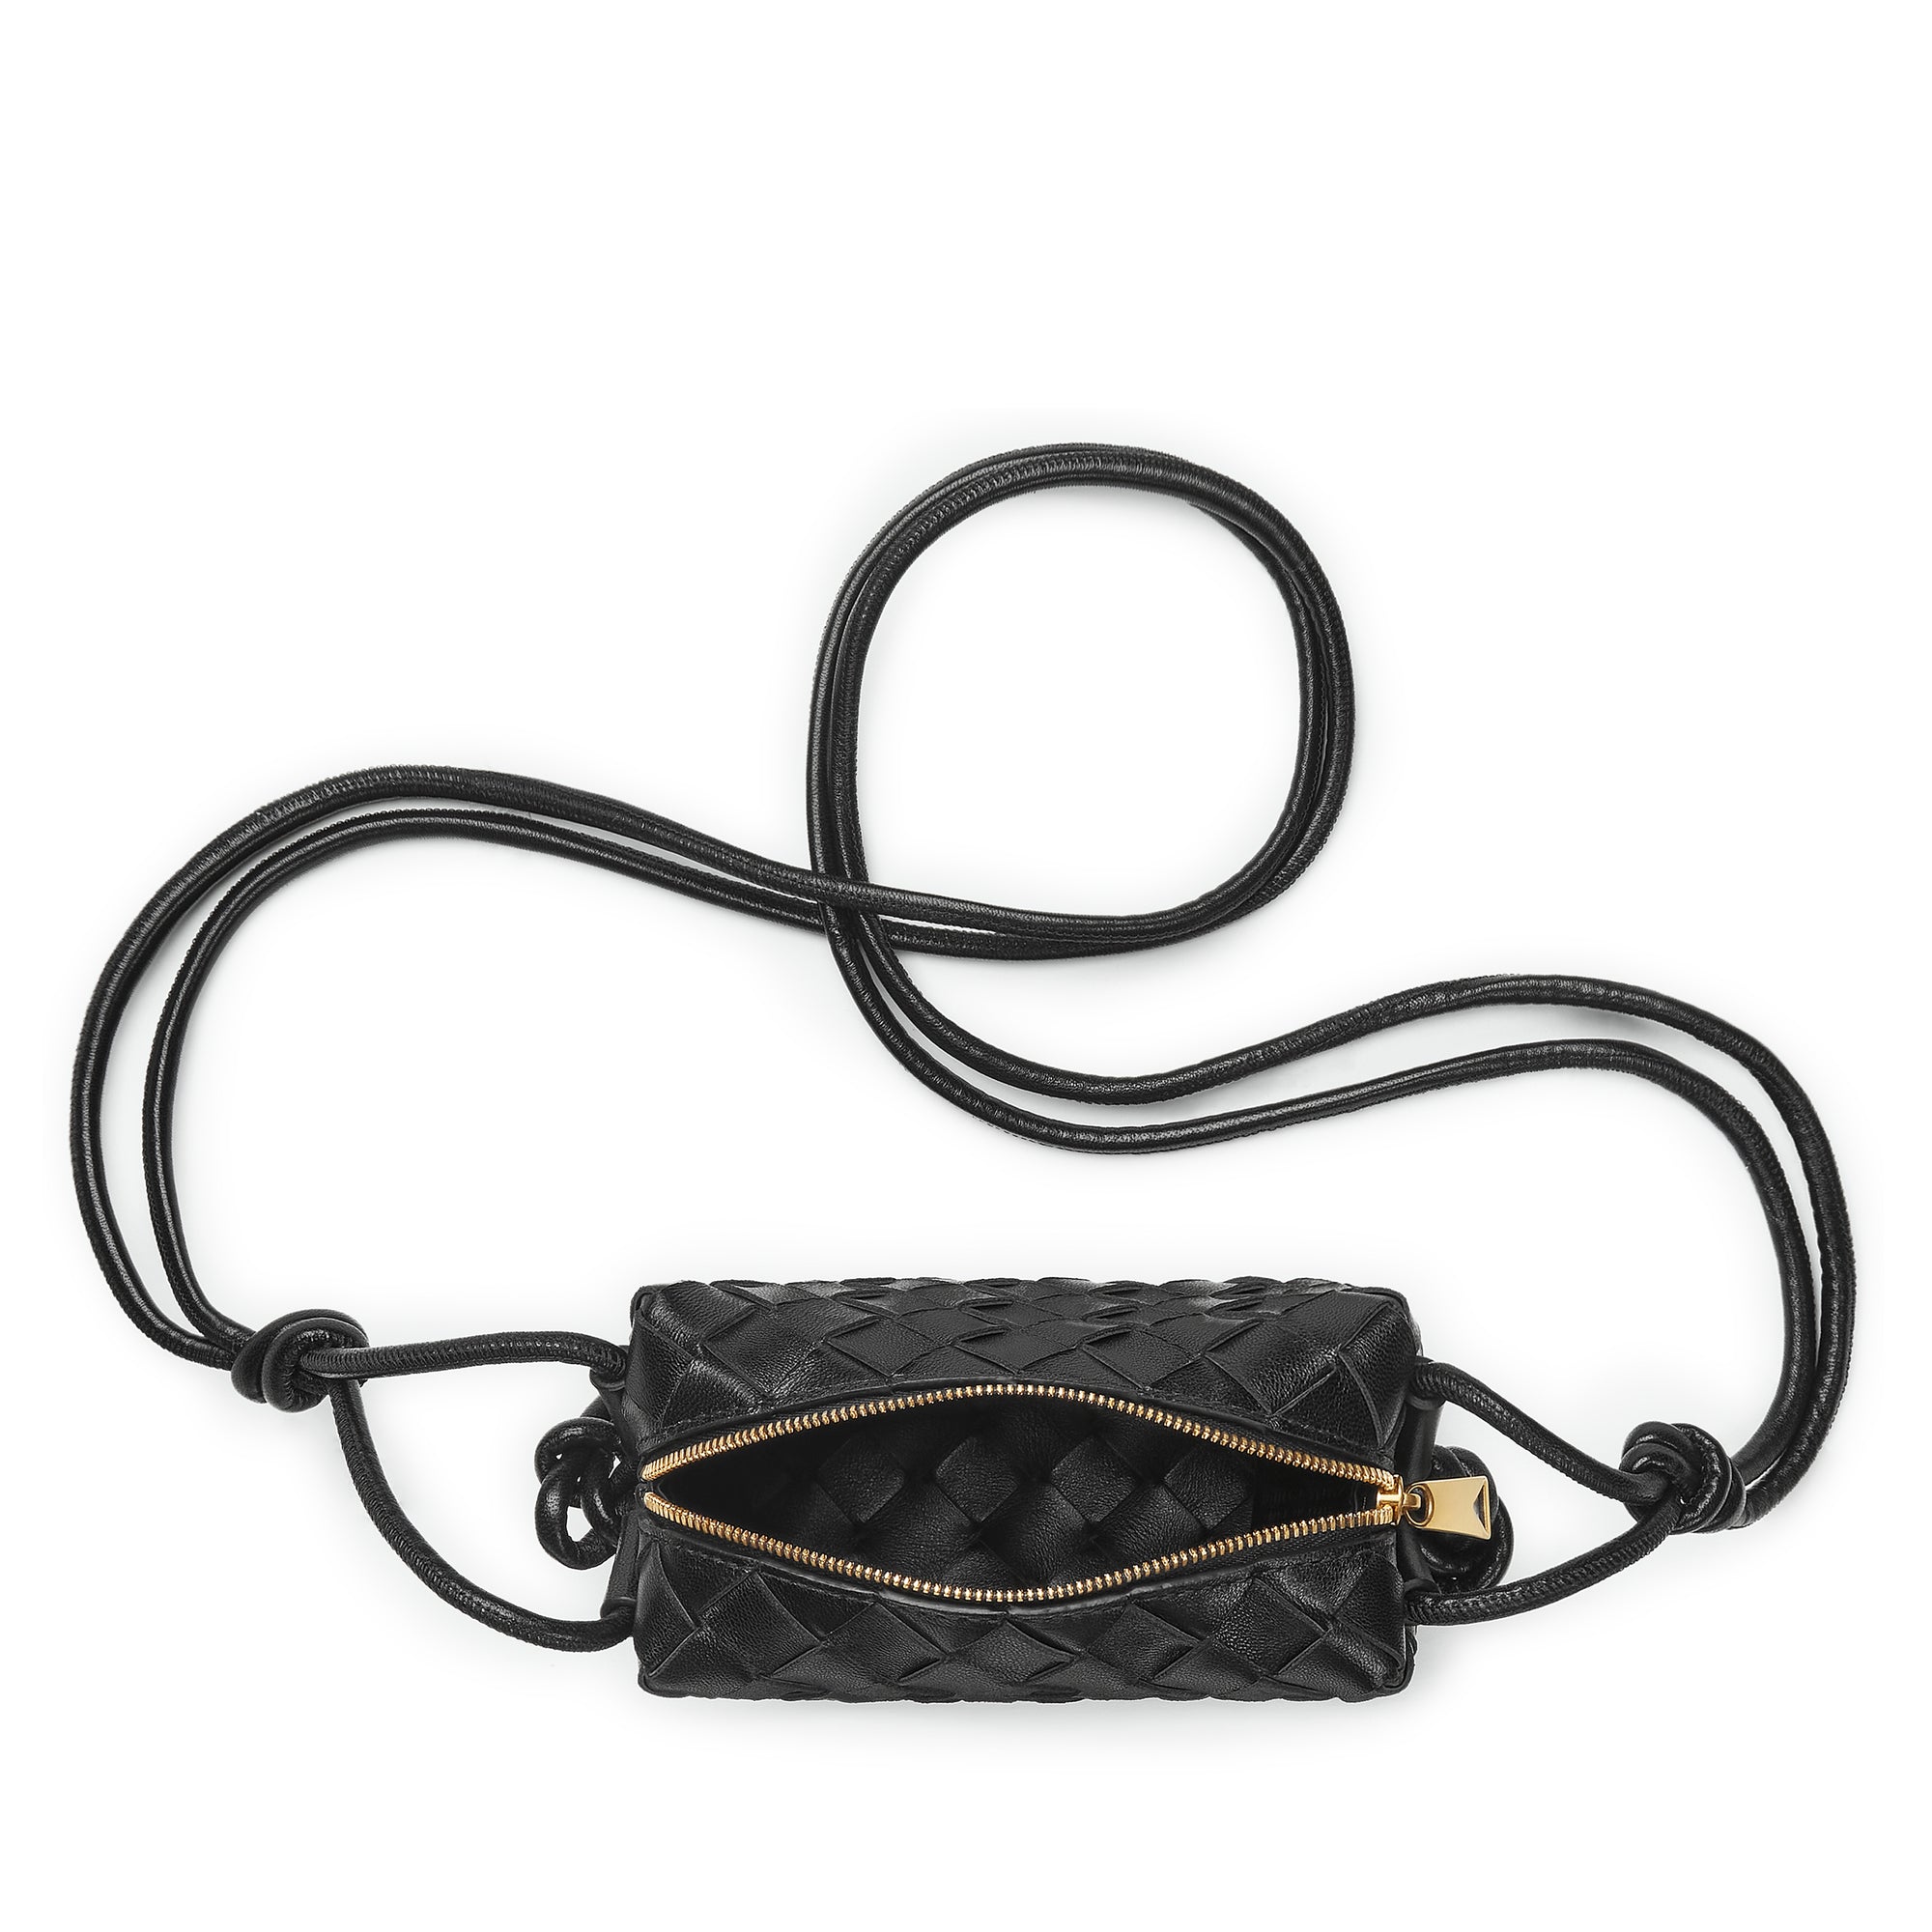 Bottega Veneta® Medium Loop Camera Bag in Thunder. Shop online now.